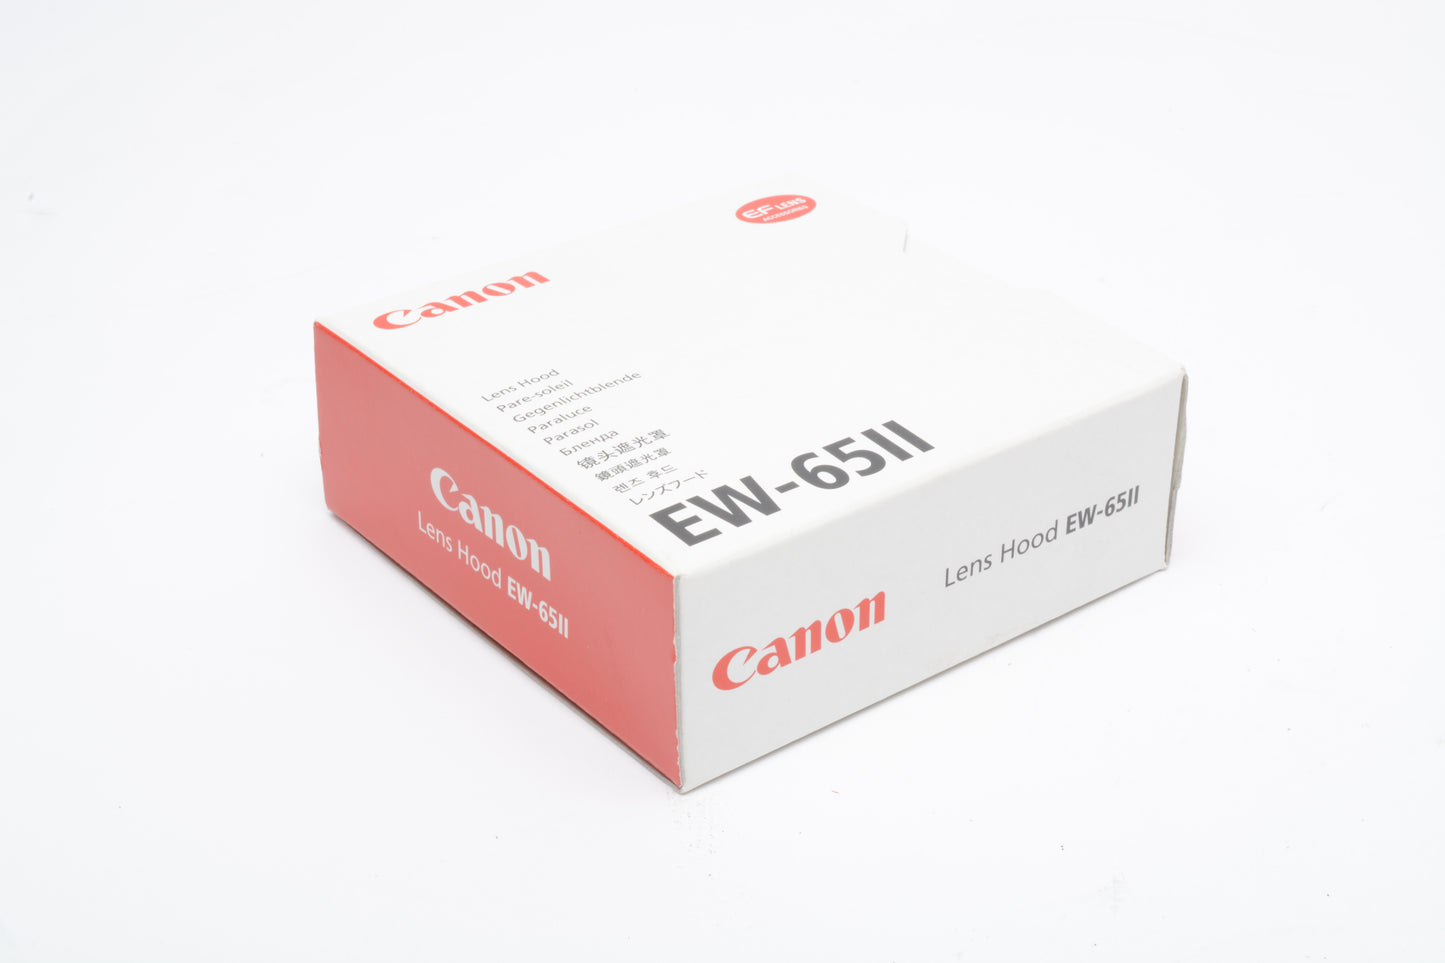 Canon Genuine EW-65II plastic lens hood in box